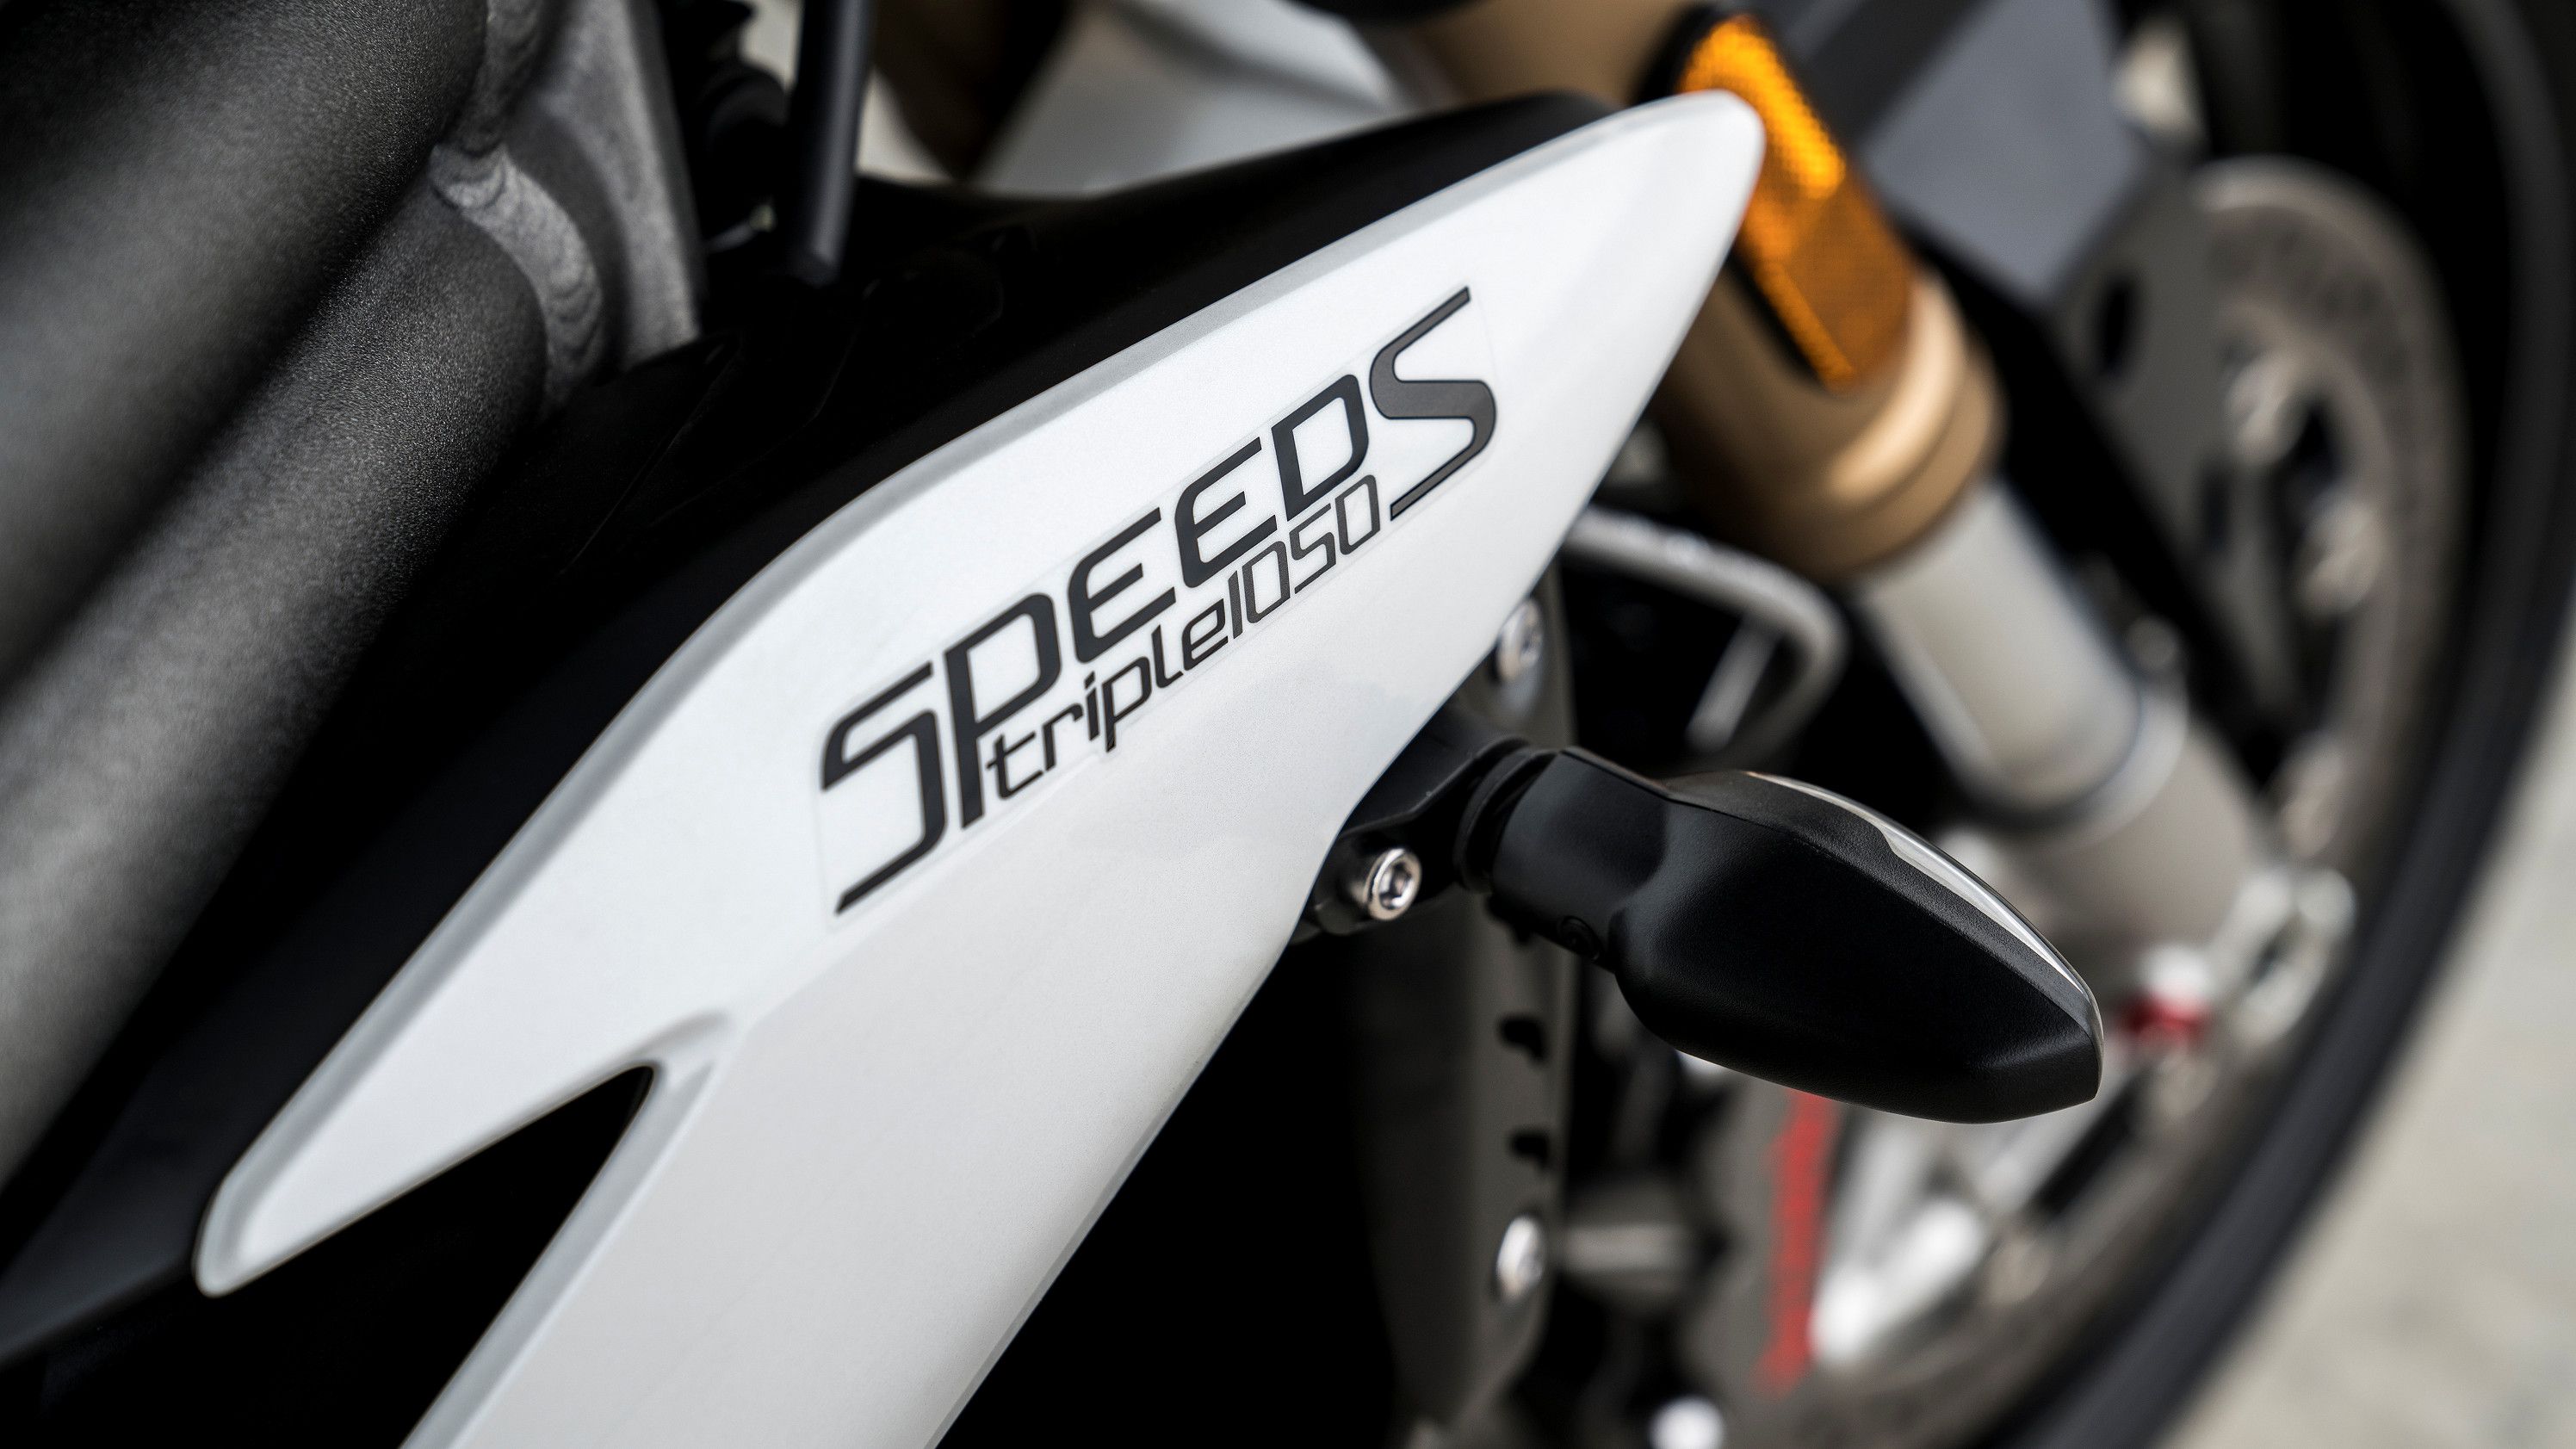 2018 - 2020 Triumph Speed Triple S / RS